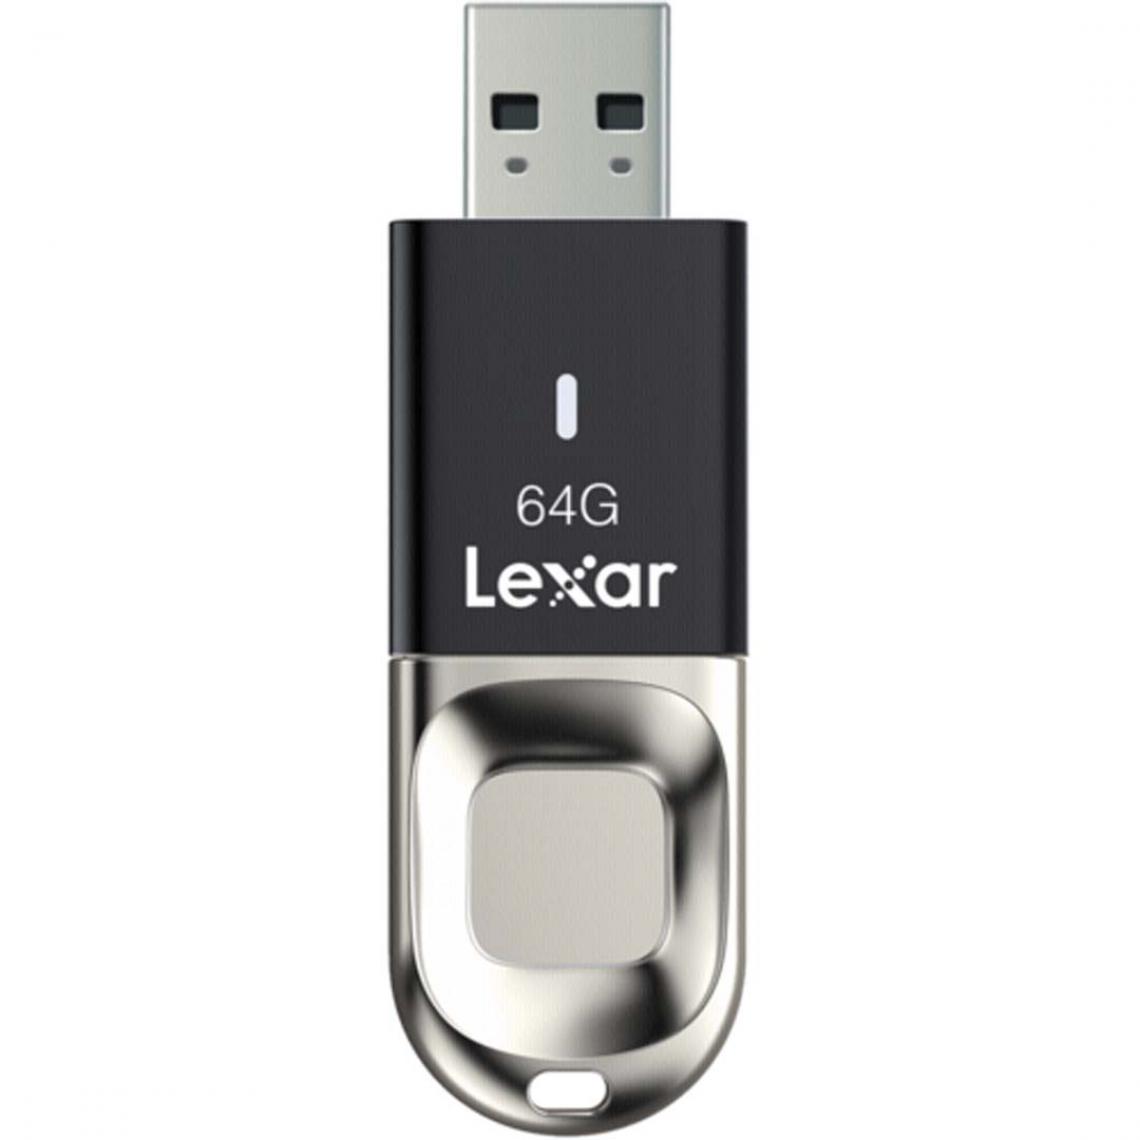 Lexar - Clé USB 3.0 64GB LEXAR Noir et Argenté - Clés USB